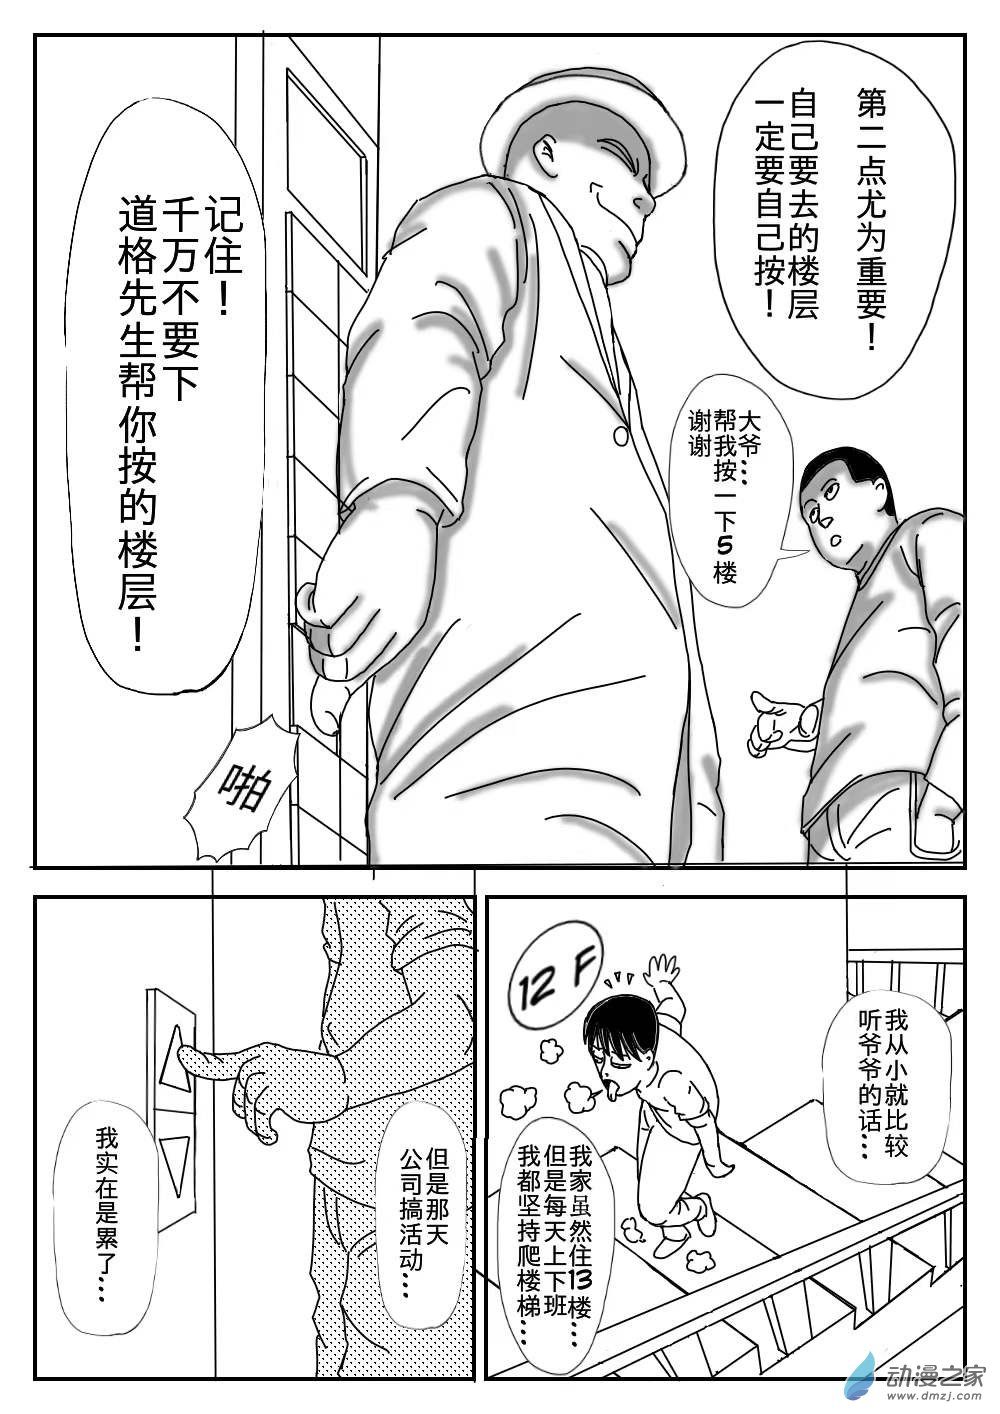 K神的短篇漫畫集 - 02 道格先生 - 6